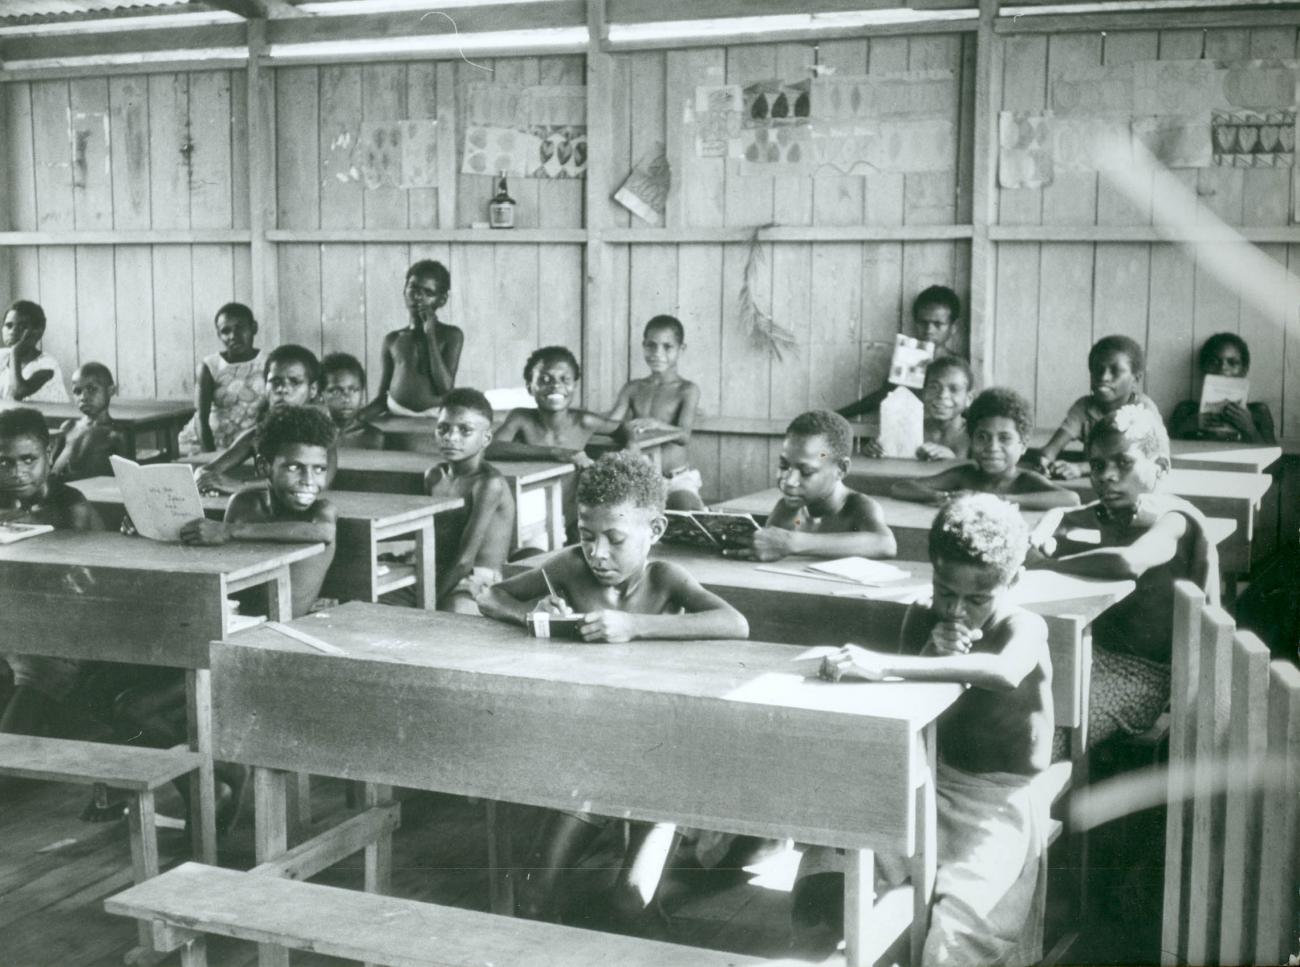 BD/40/40 - 
Children in class
